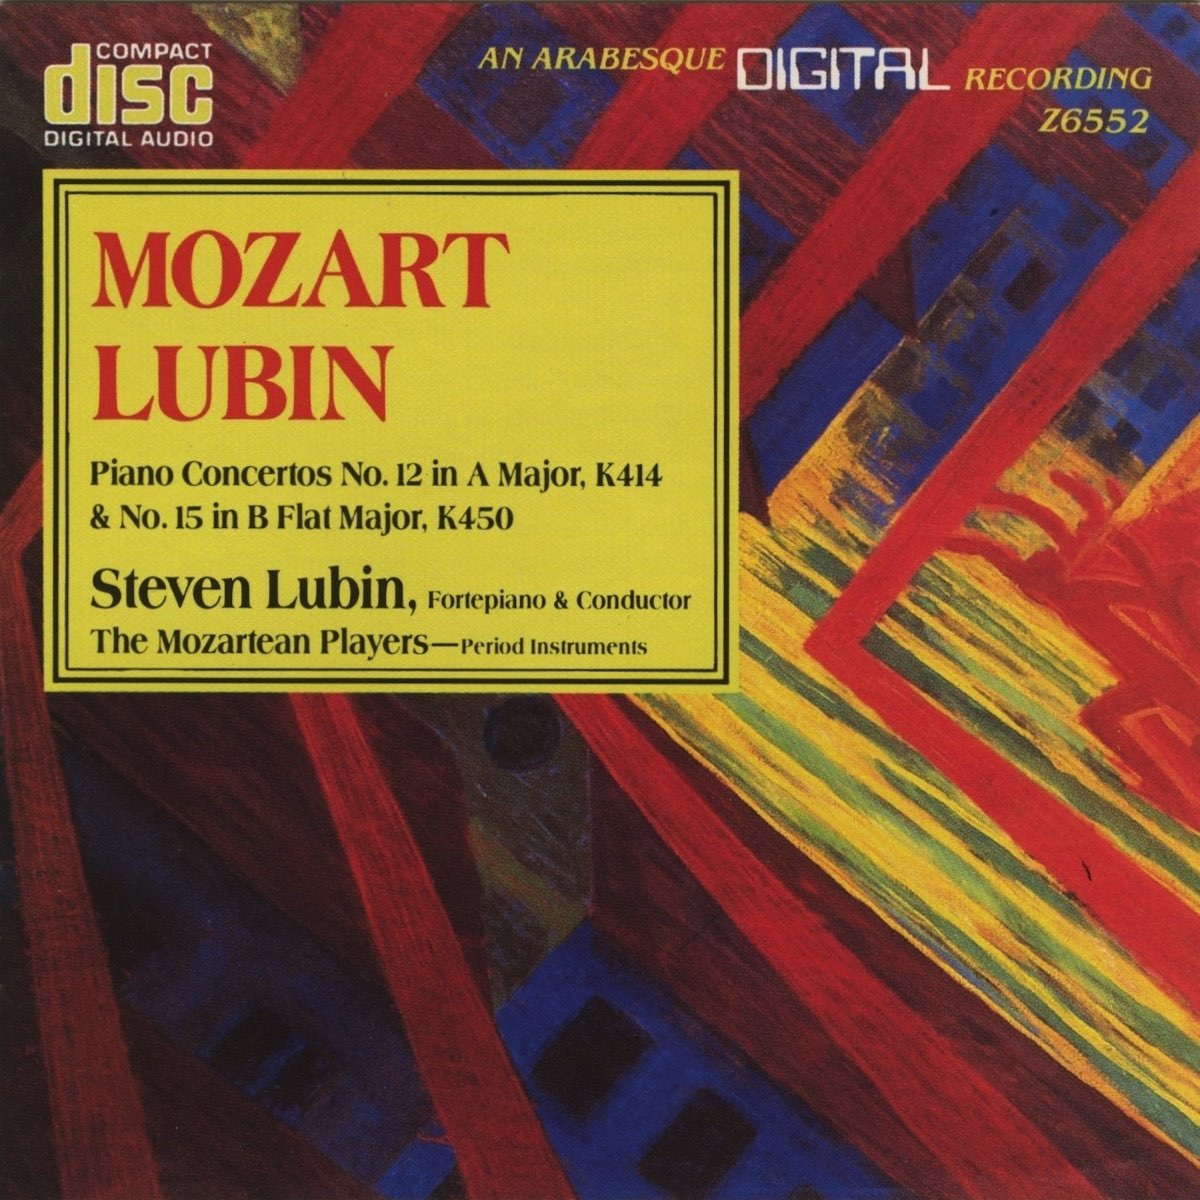 Mozart: Piano Concertos No. 12 in A Major, K414 & No. 15 in B Flat Major,  K450 - Album by The Mozartean Players & Steven Lubin - Apple Music